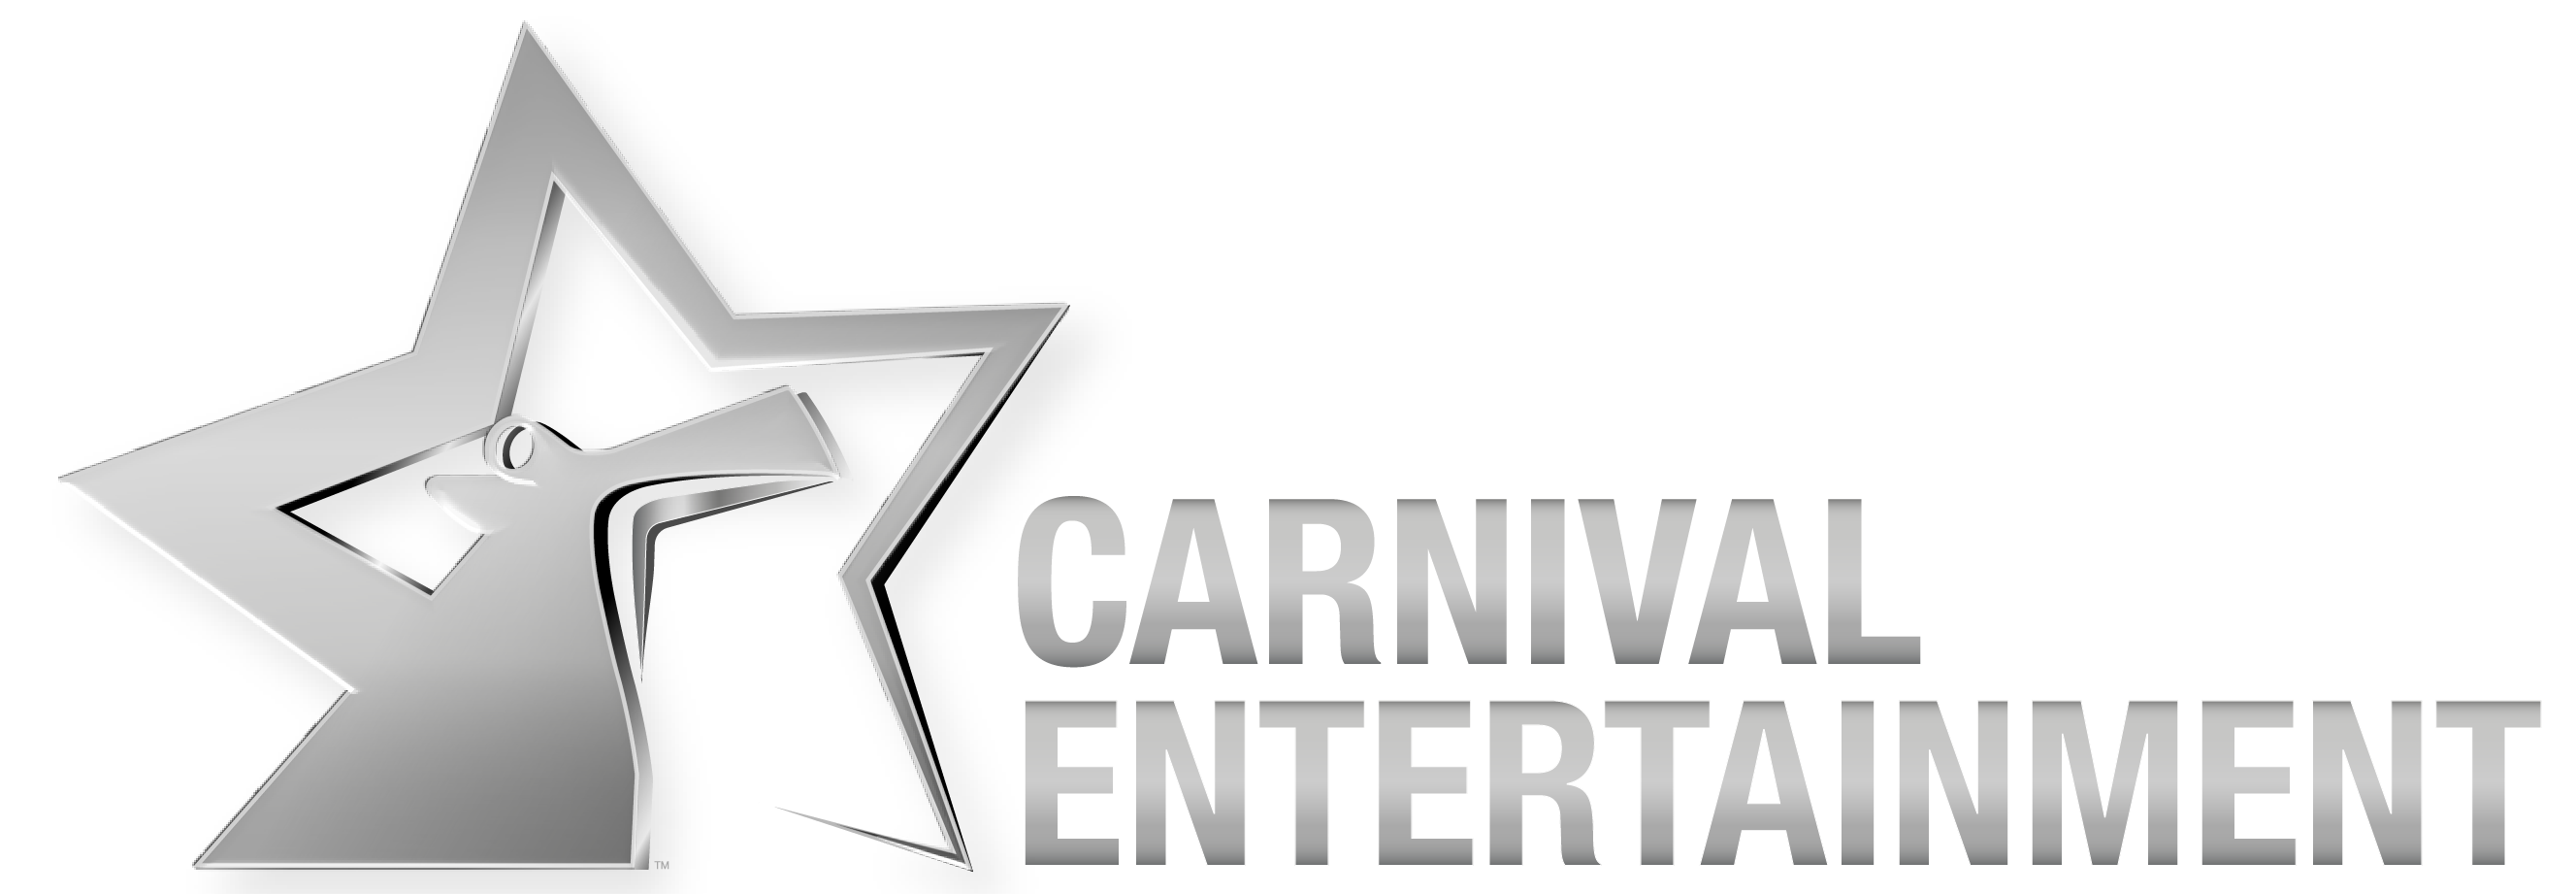 carnival cruise entertainment director